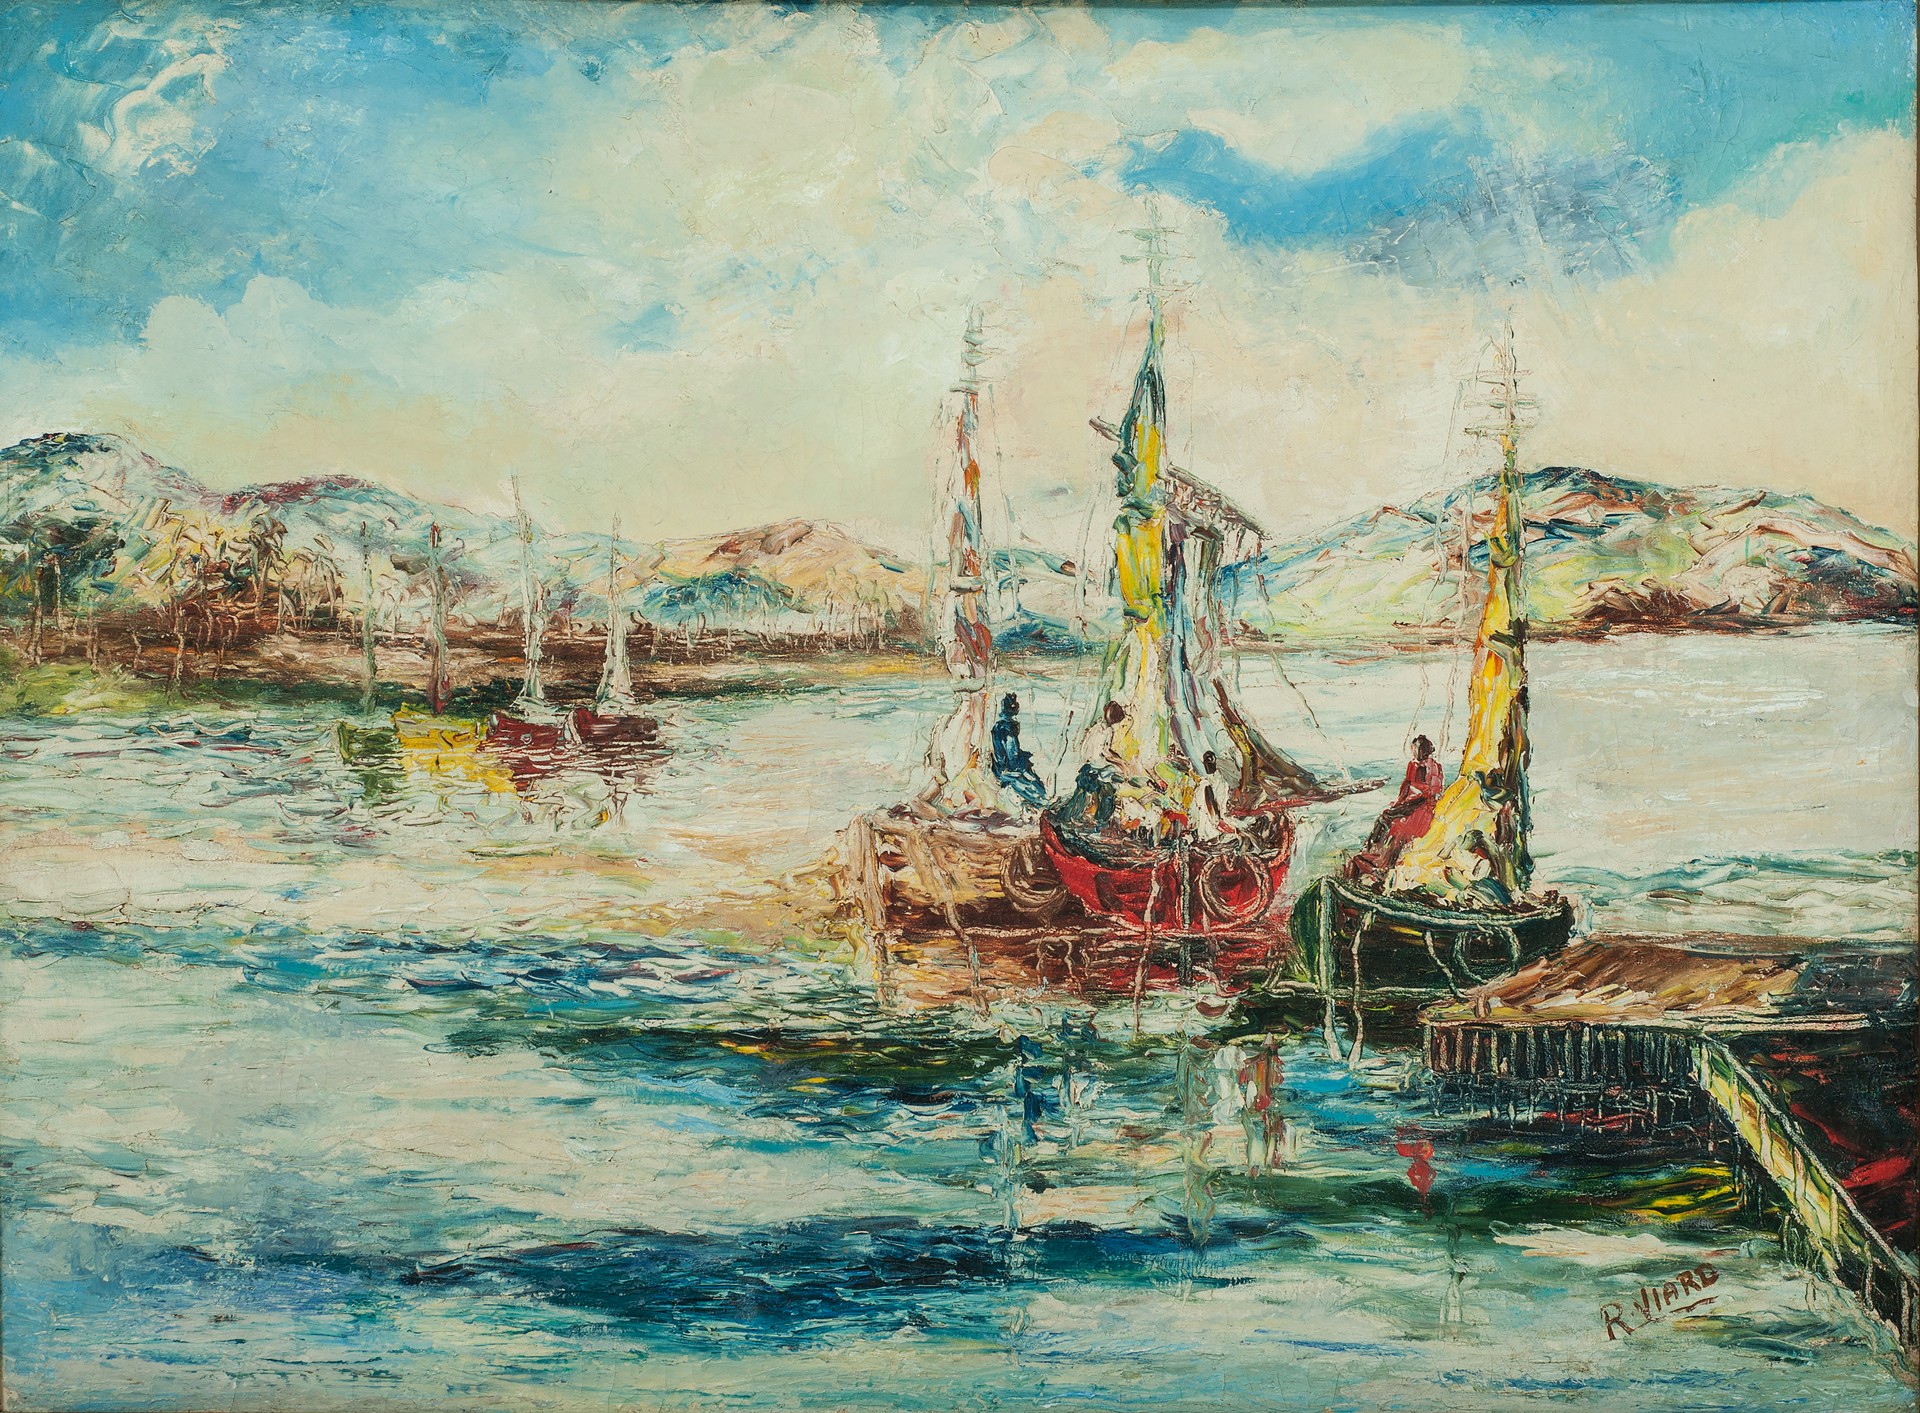 Wavy Marine Scene #2-3-96GSN by Raoul Viard (1921-1984)